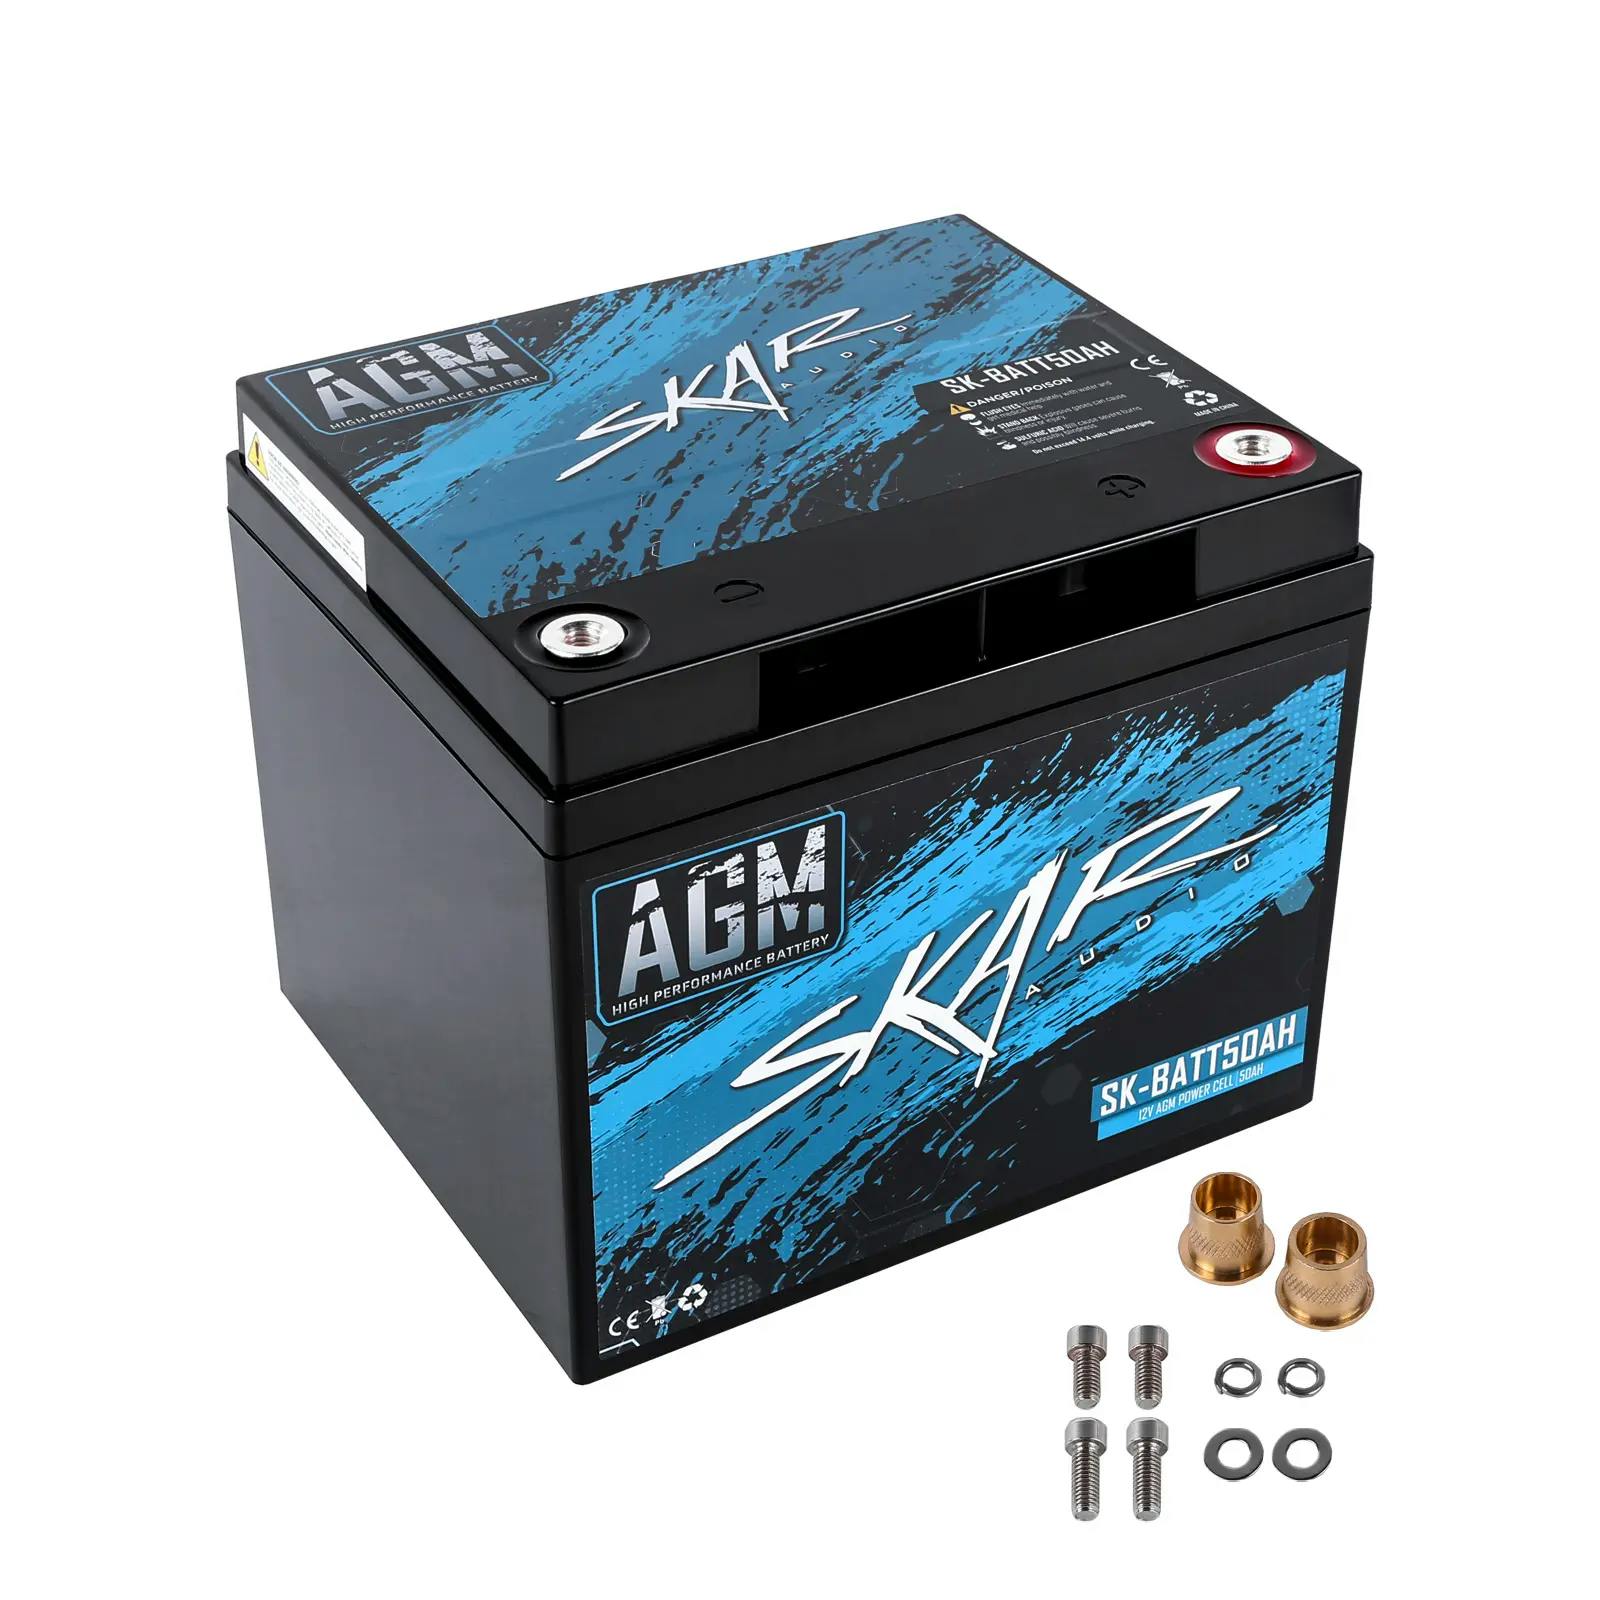 Featured Product Photo for SK-BATT50AH | 12V 50Ah AGM High Performance Car Audio Battery